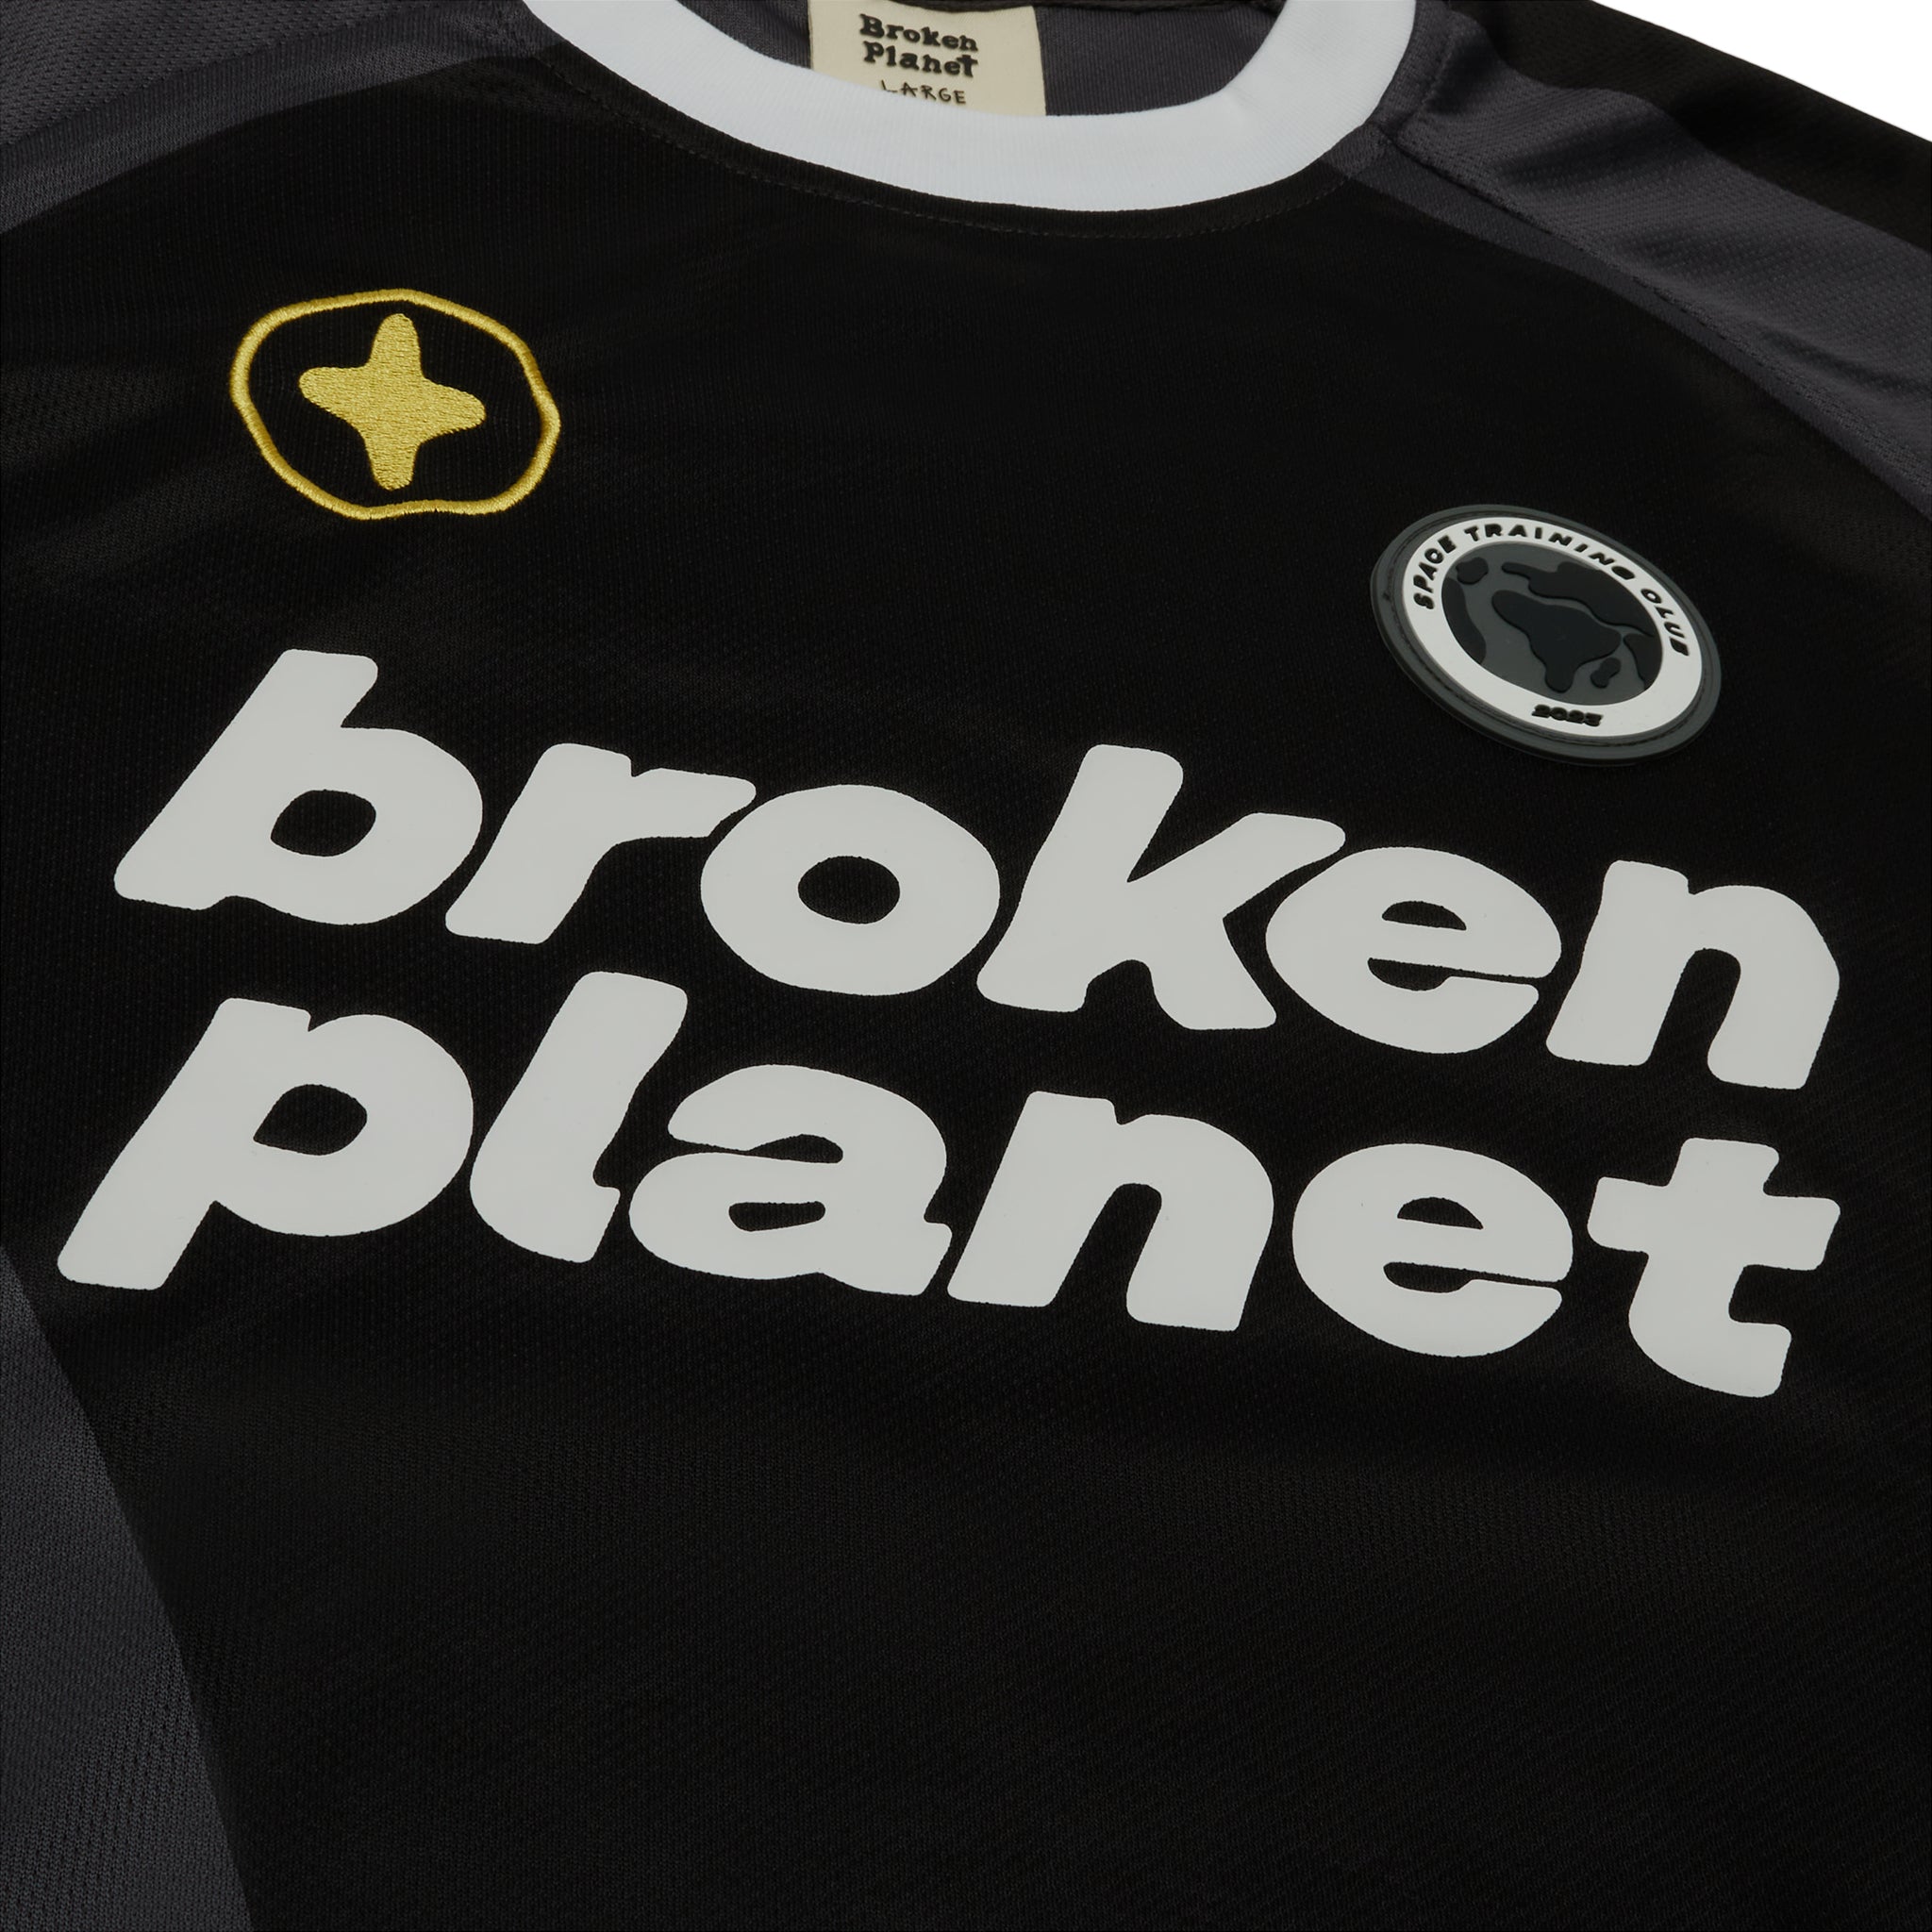 Chest view of Broken Planet Cosmic Speed Football T Shirt Black Grey BP-FT-BLACK/GRAY